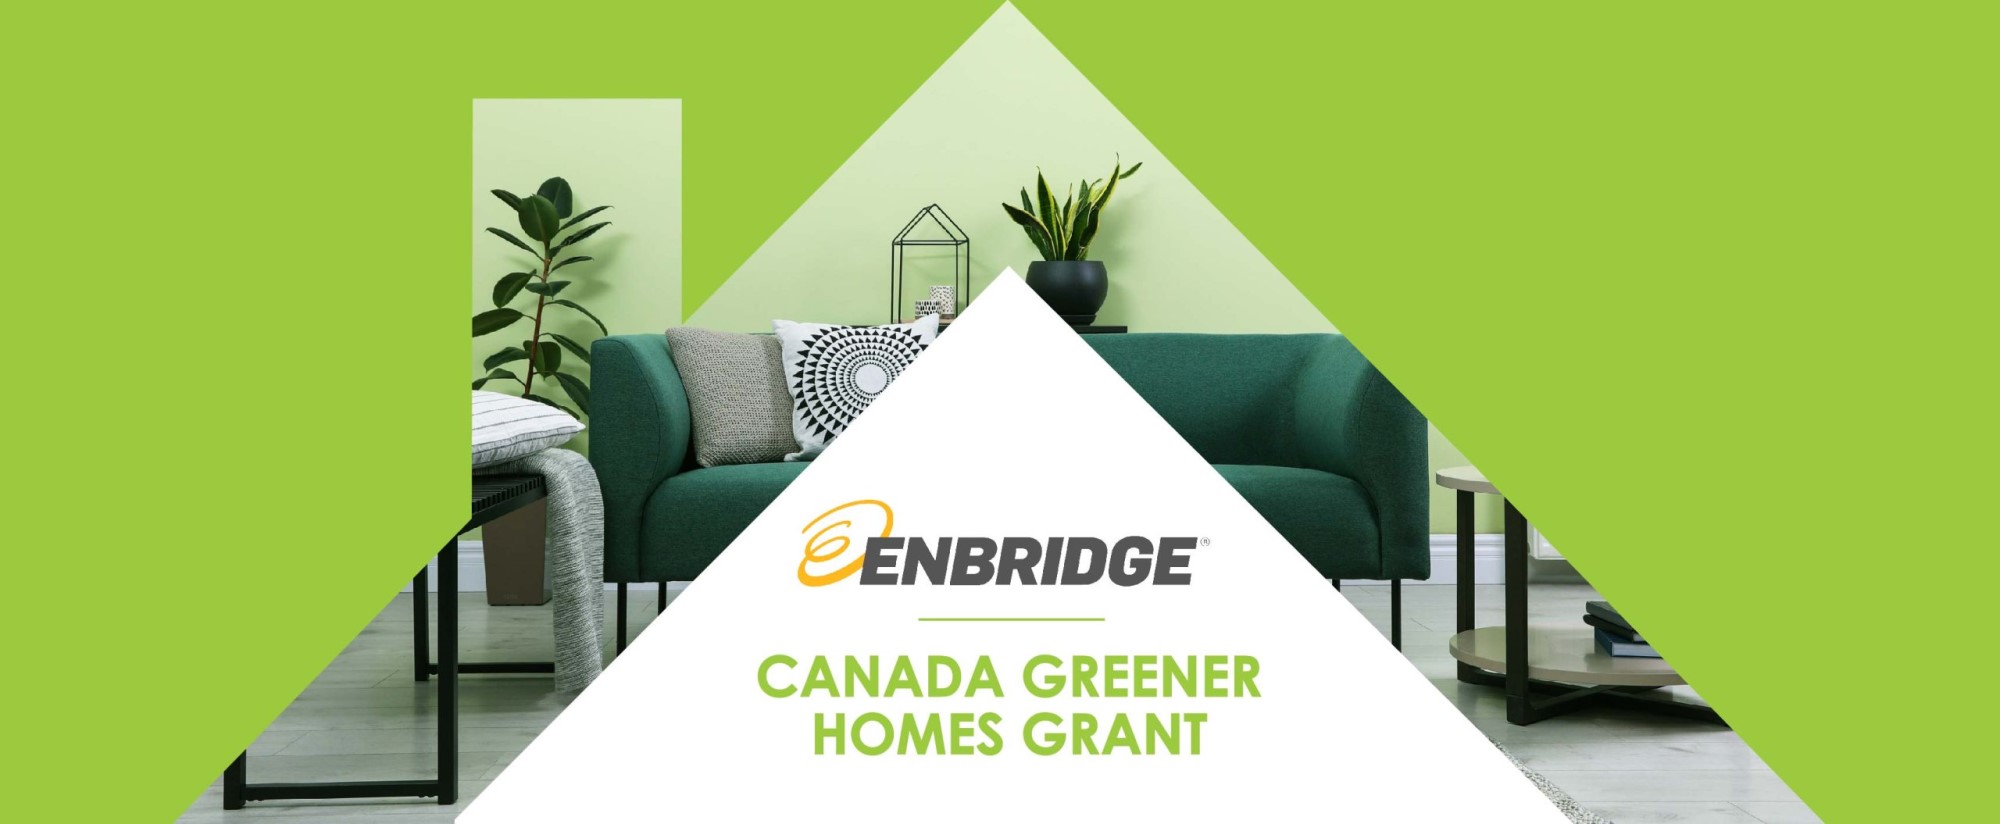 Enbridge and Greener Homes